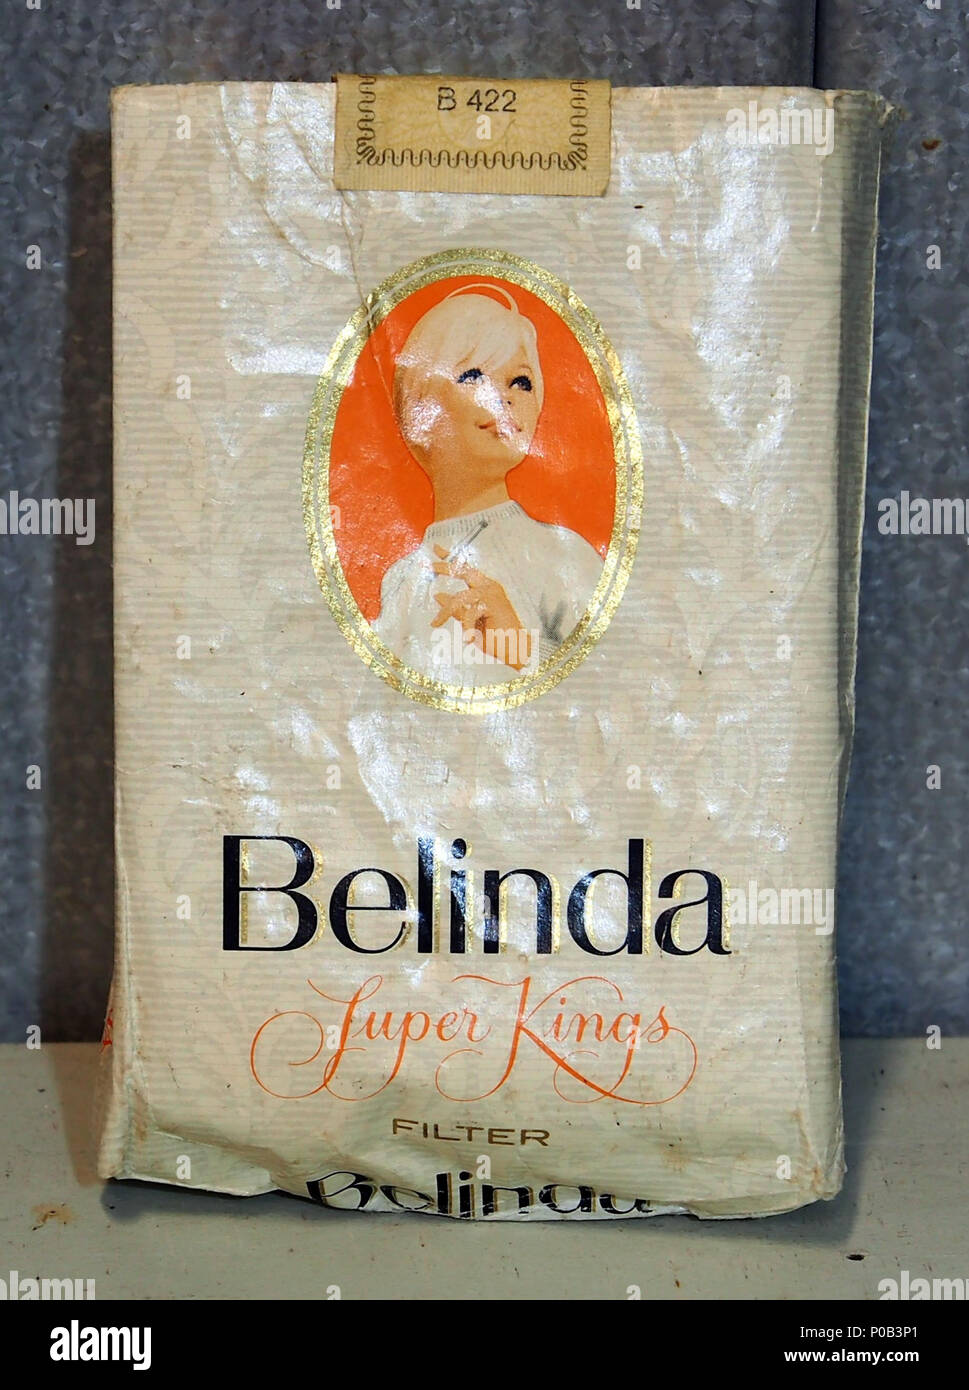 . Old product not sold anymore!  . 2 November 2013, 13:57:56. Alf van Beem 1 Belinda Super Kings cigarettes pic1 Stock Photo